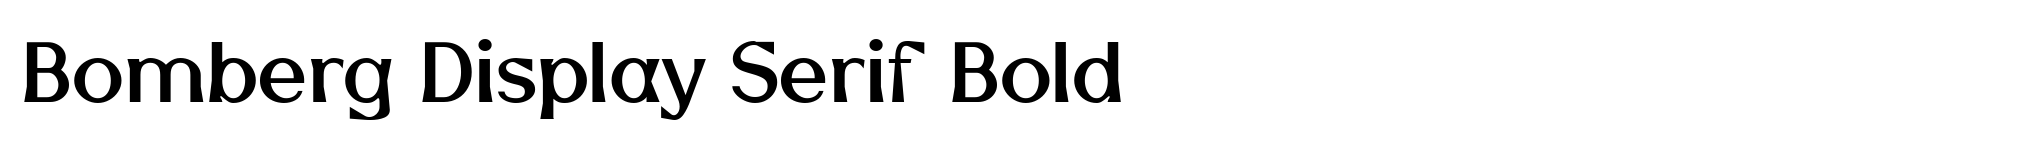 Bomberg Display Serif Bold image